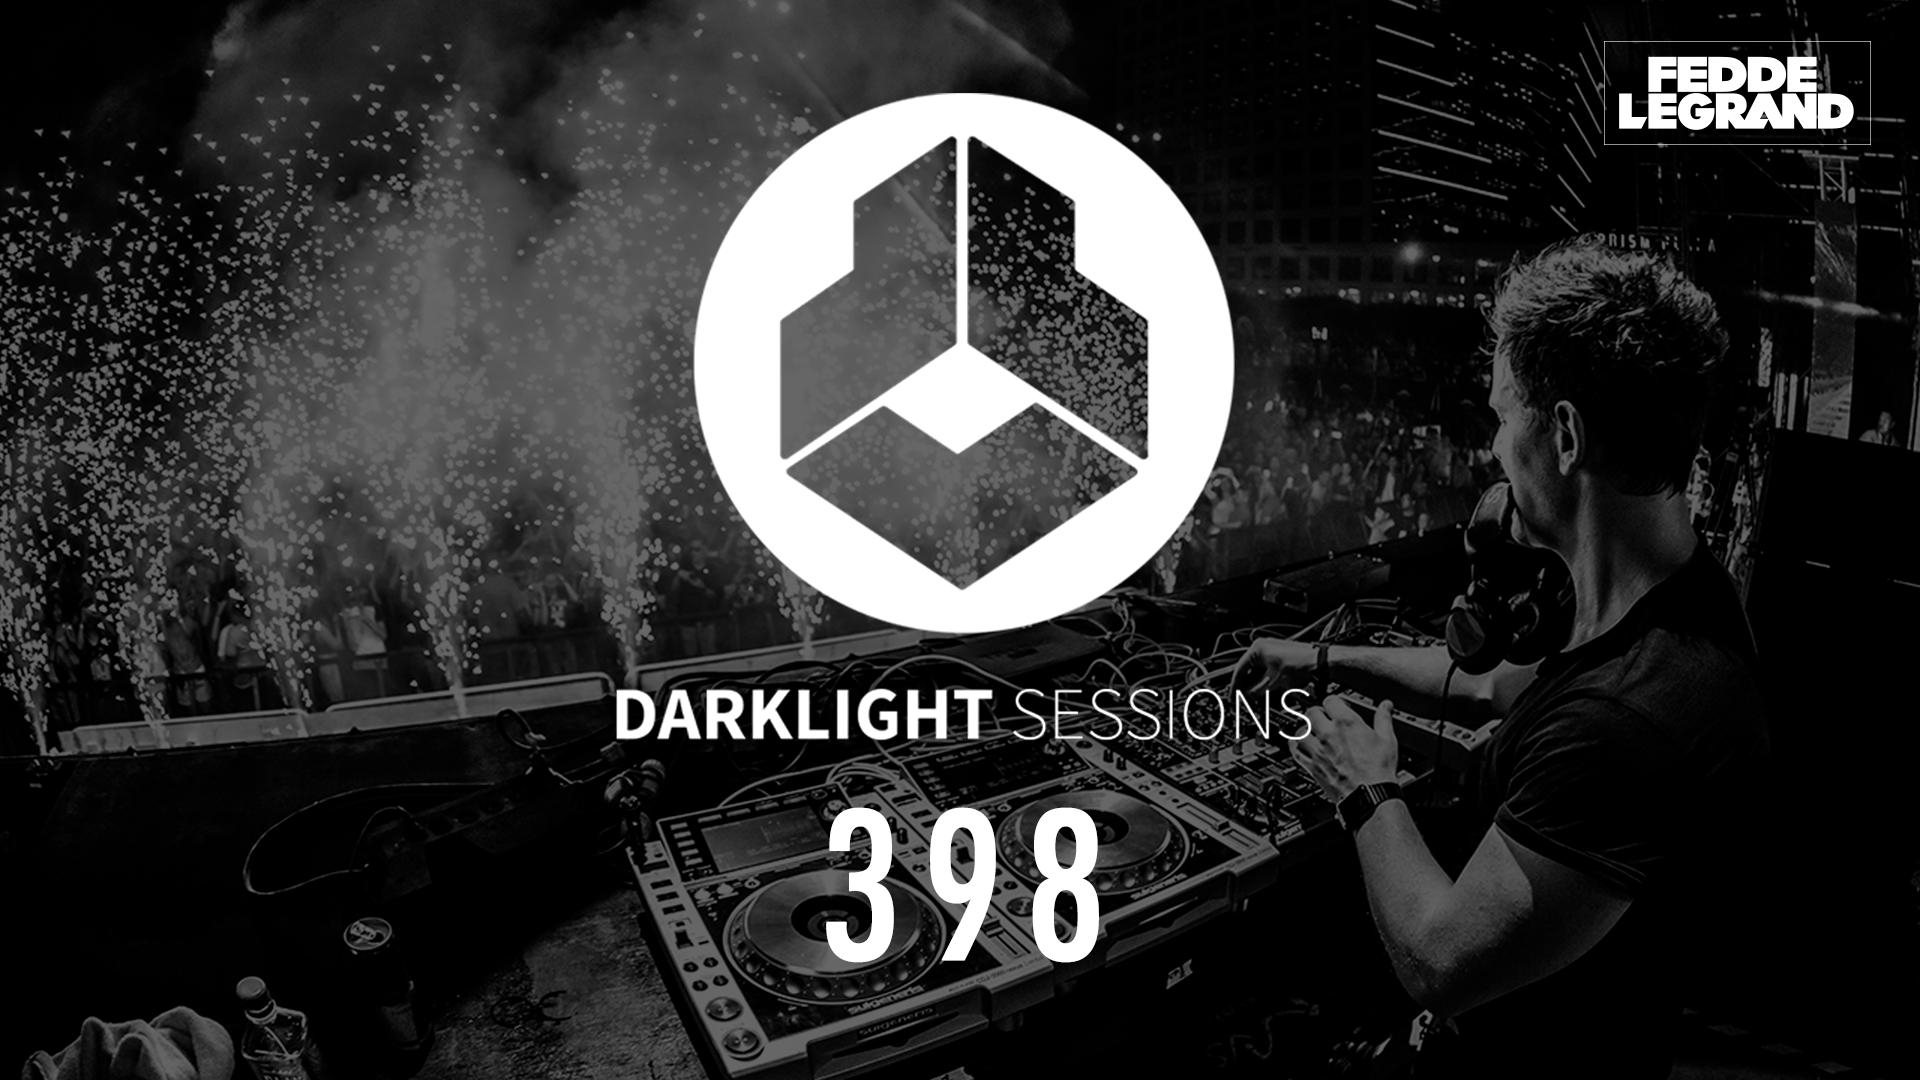 Darklight Sessions 398